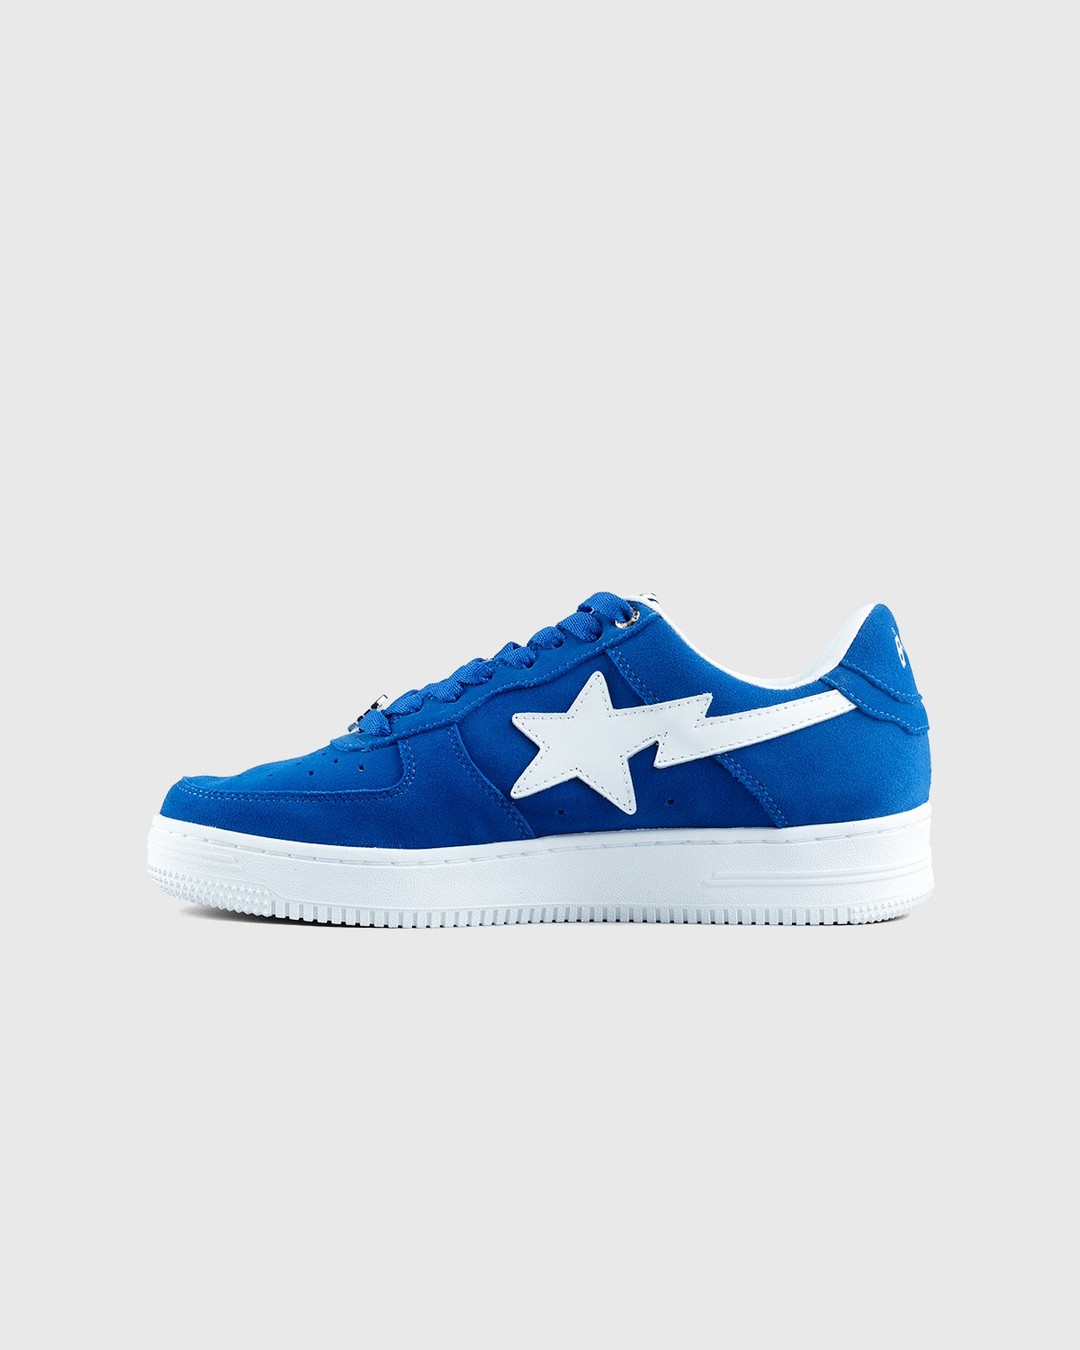 BAPE x Highsnobiety – BAPE STA Blue - Sneakers - Blue - Image 4